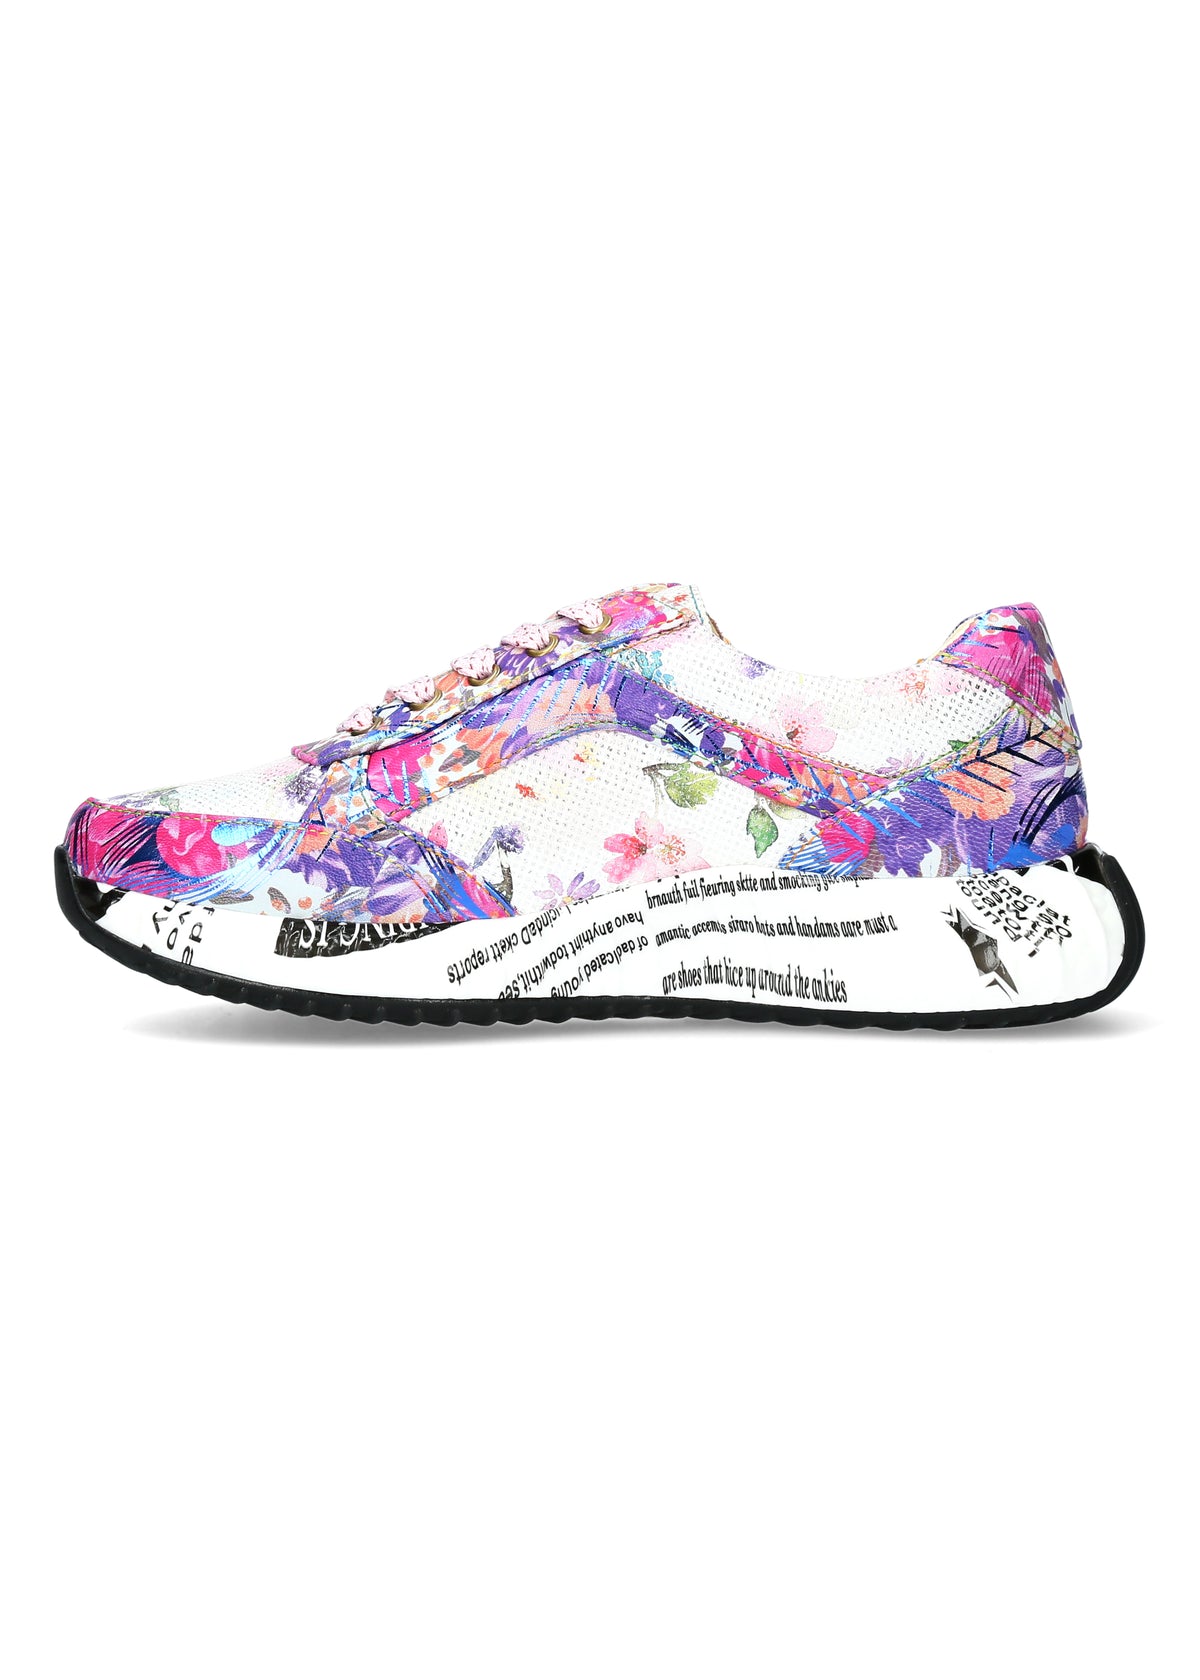 Sneakers med chunky sula - flerfärgat mönster i lila nyans, Burton